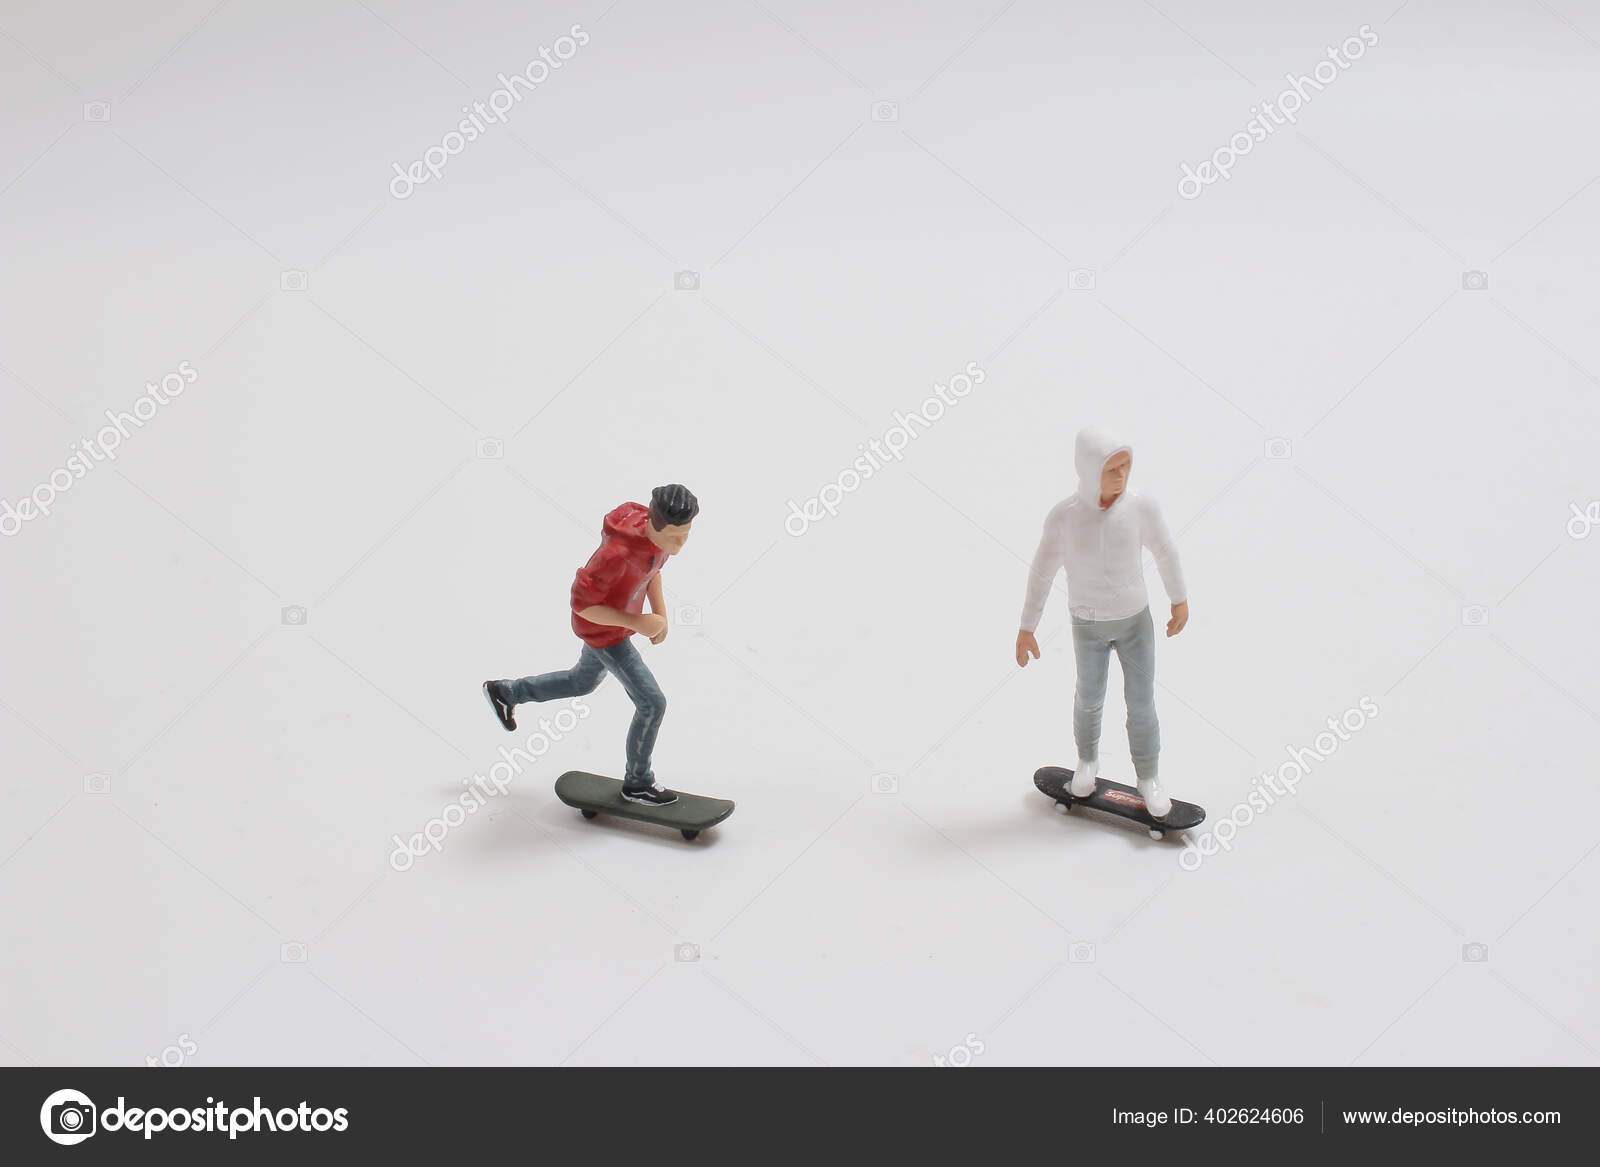 Die Minifigur Spielt Das Skateboard Bord - Stockfotografie: lizenzfreie  Fotos © sameashk.yahoo.com.hk 402624606 | Depositphotos